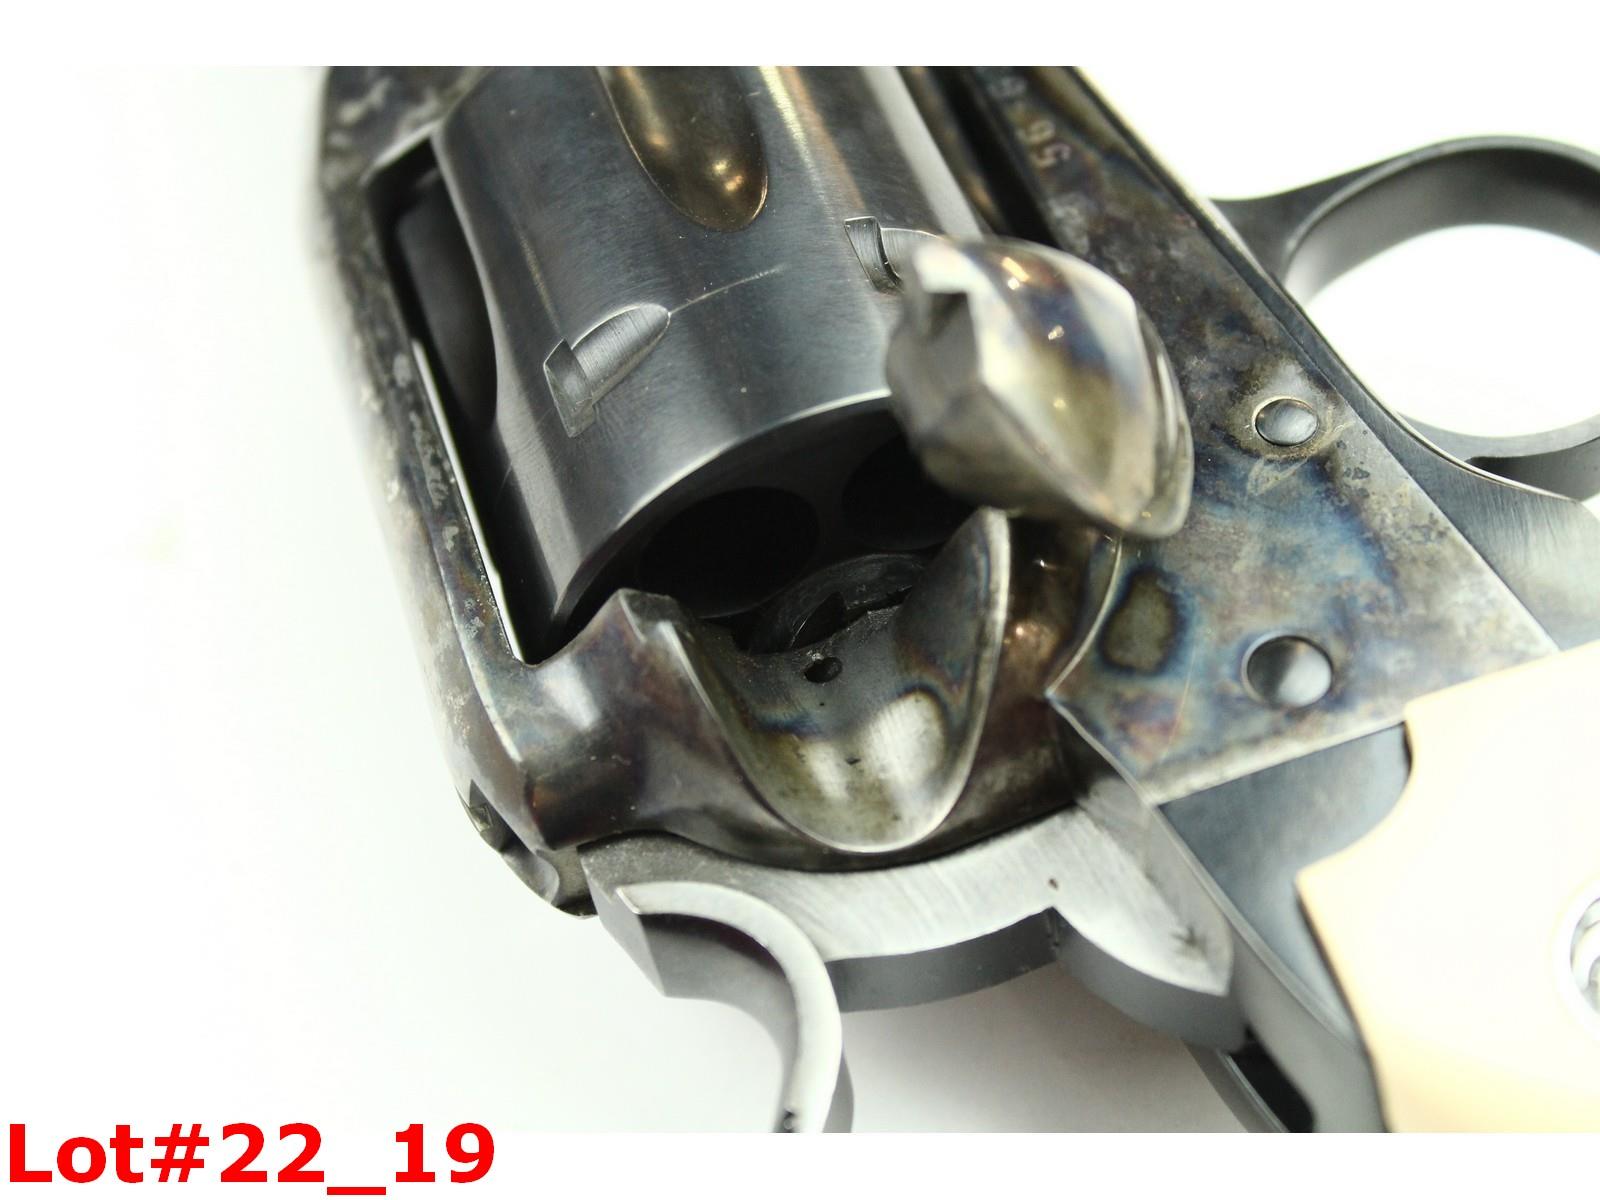 Ruger Bisley Vaquero 45LC Caliber Pistol